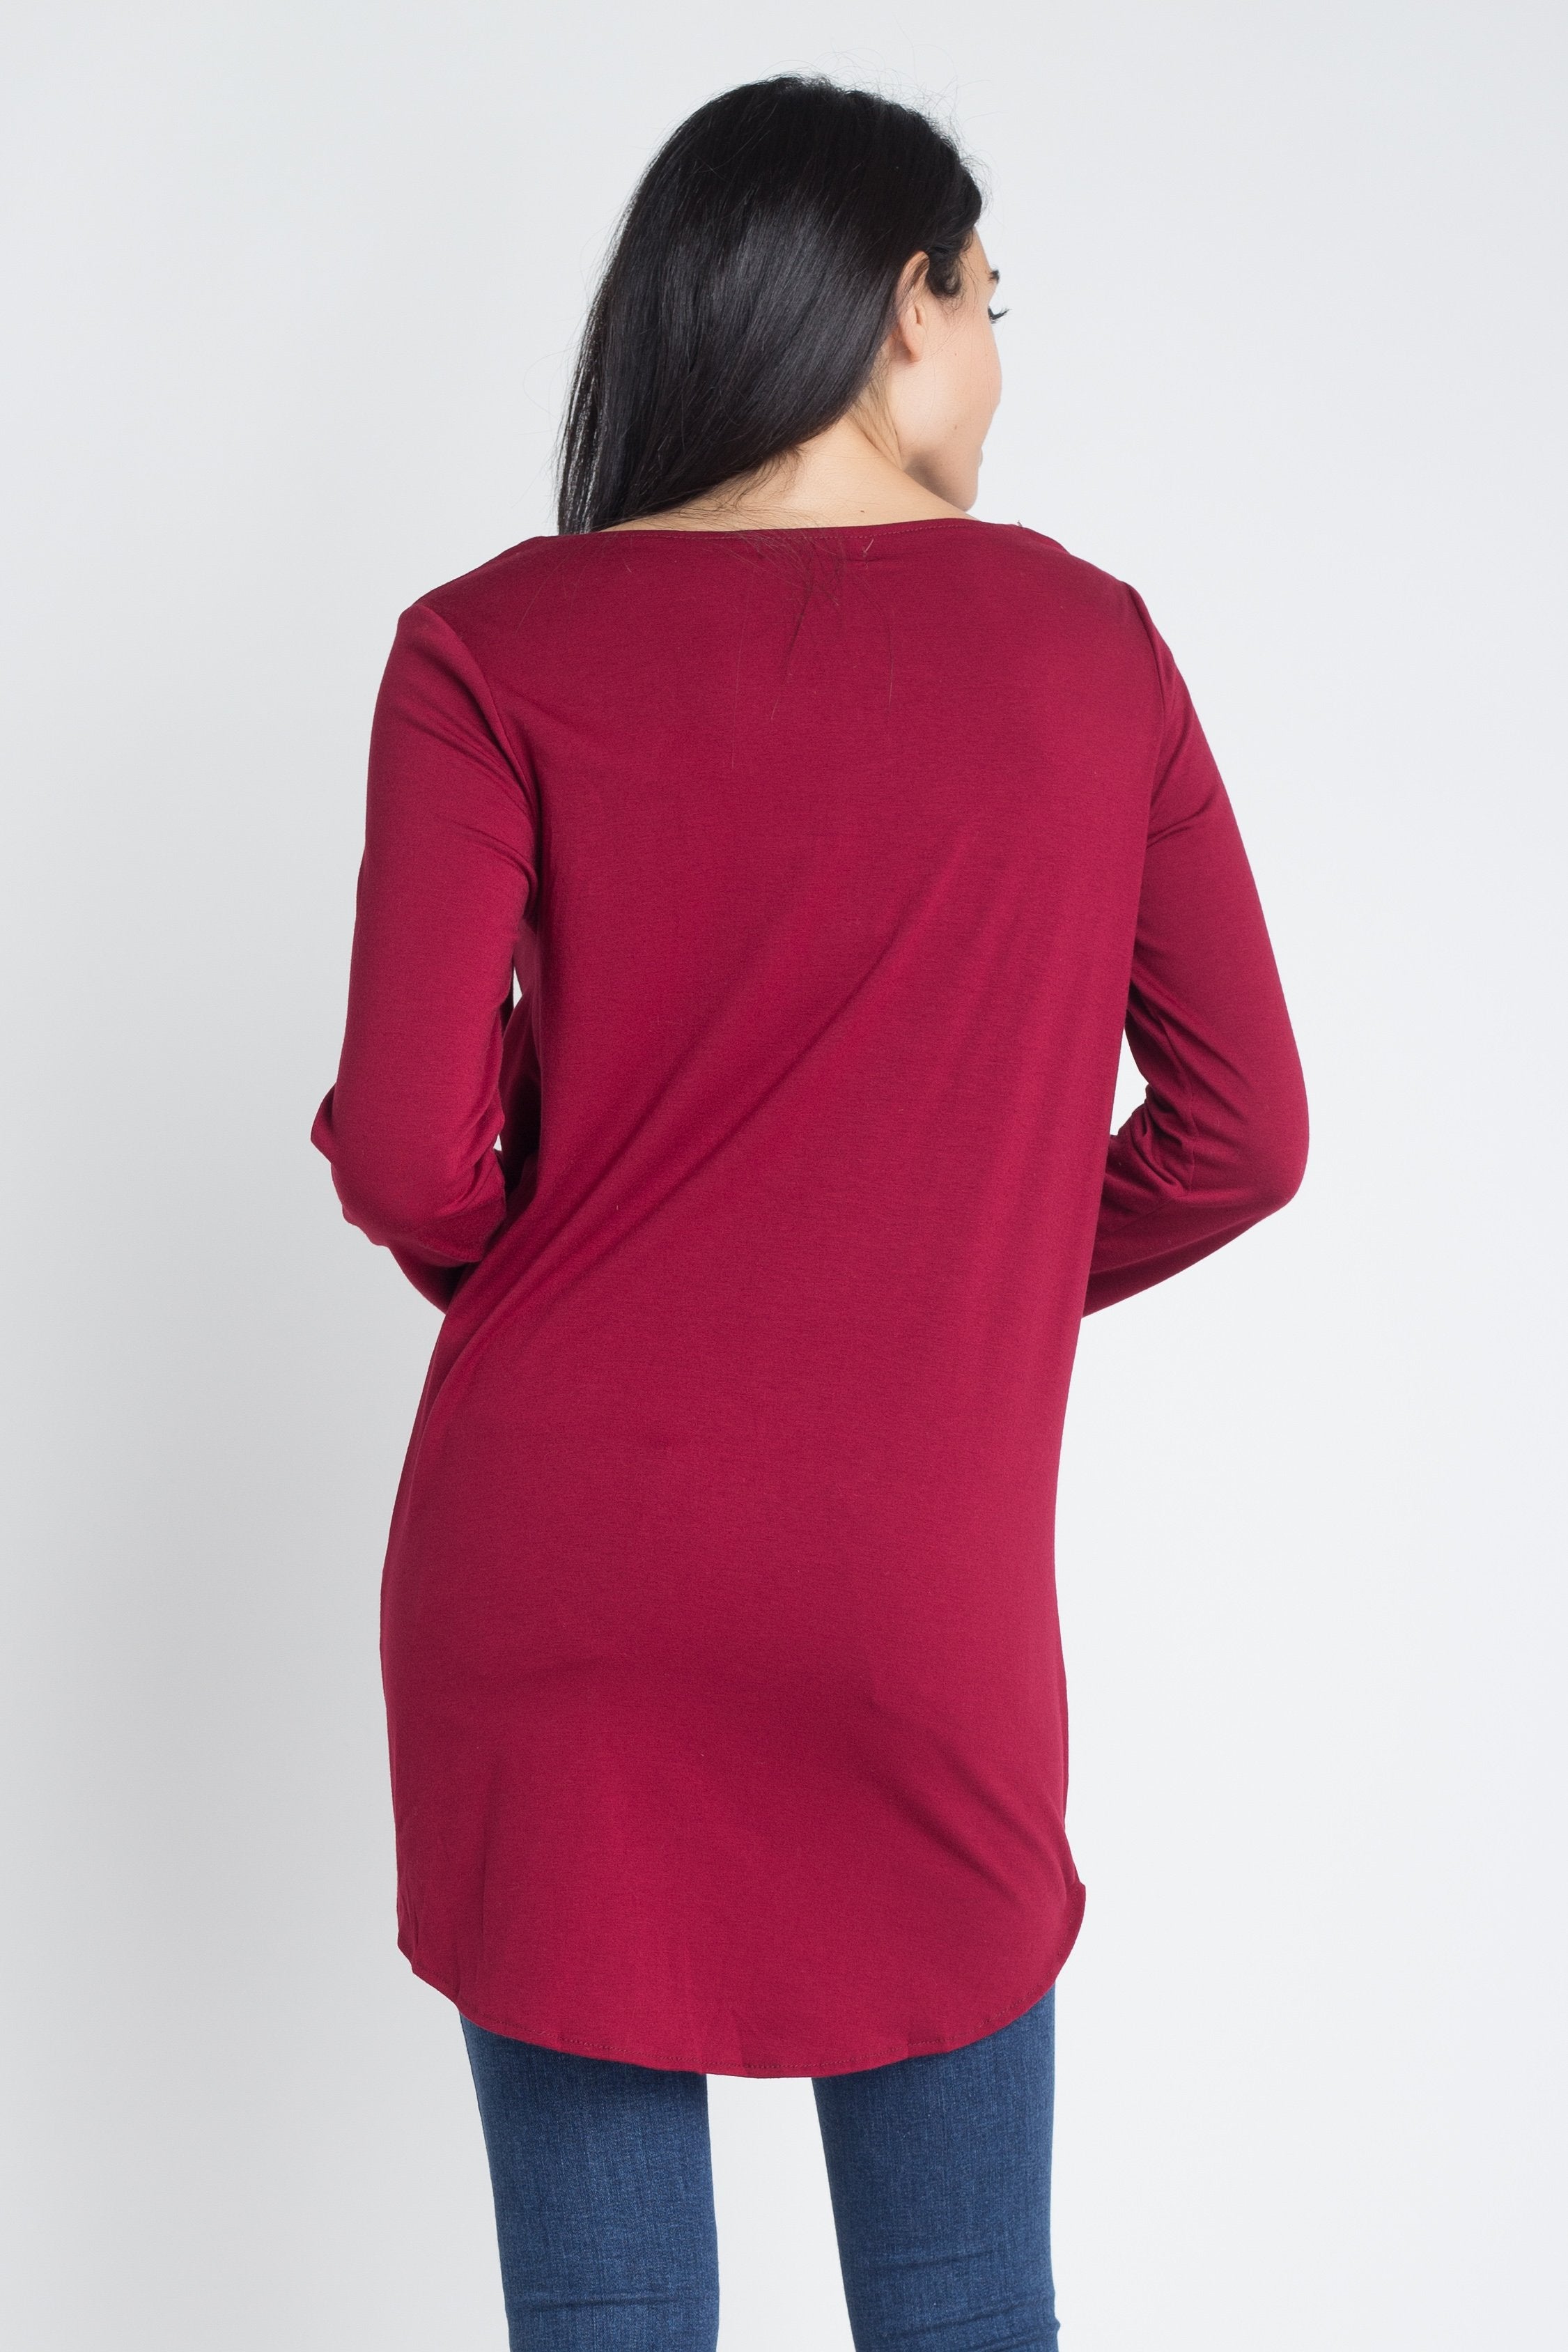 Women's Lace Up Wrap Long Sleeve Top - Shop Luxurious57